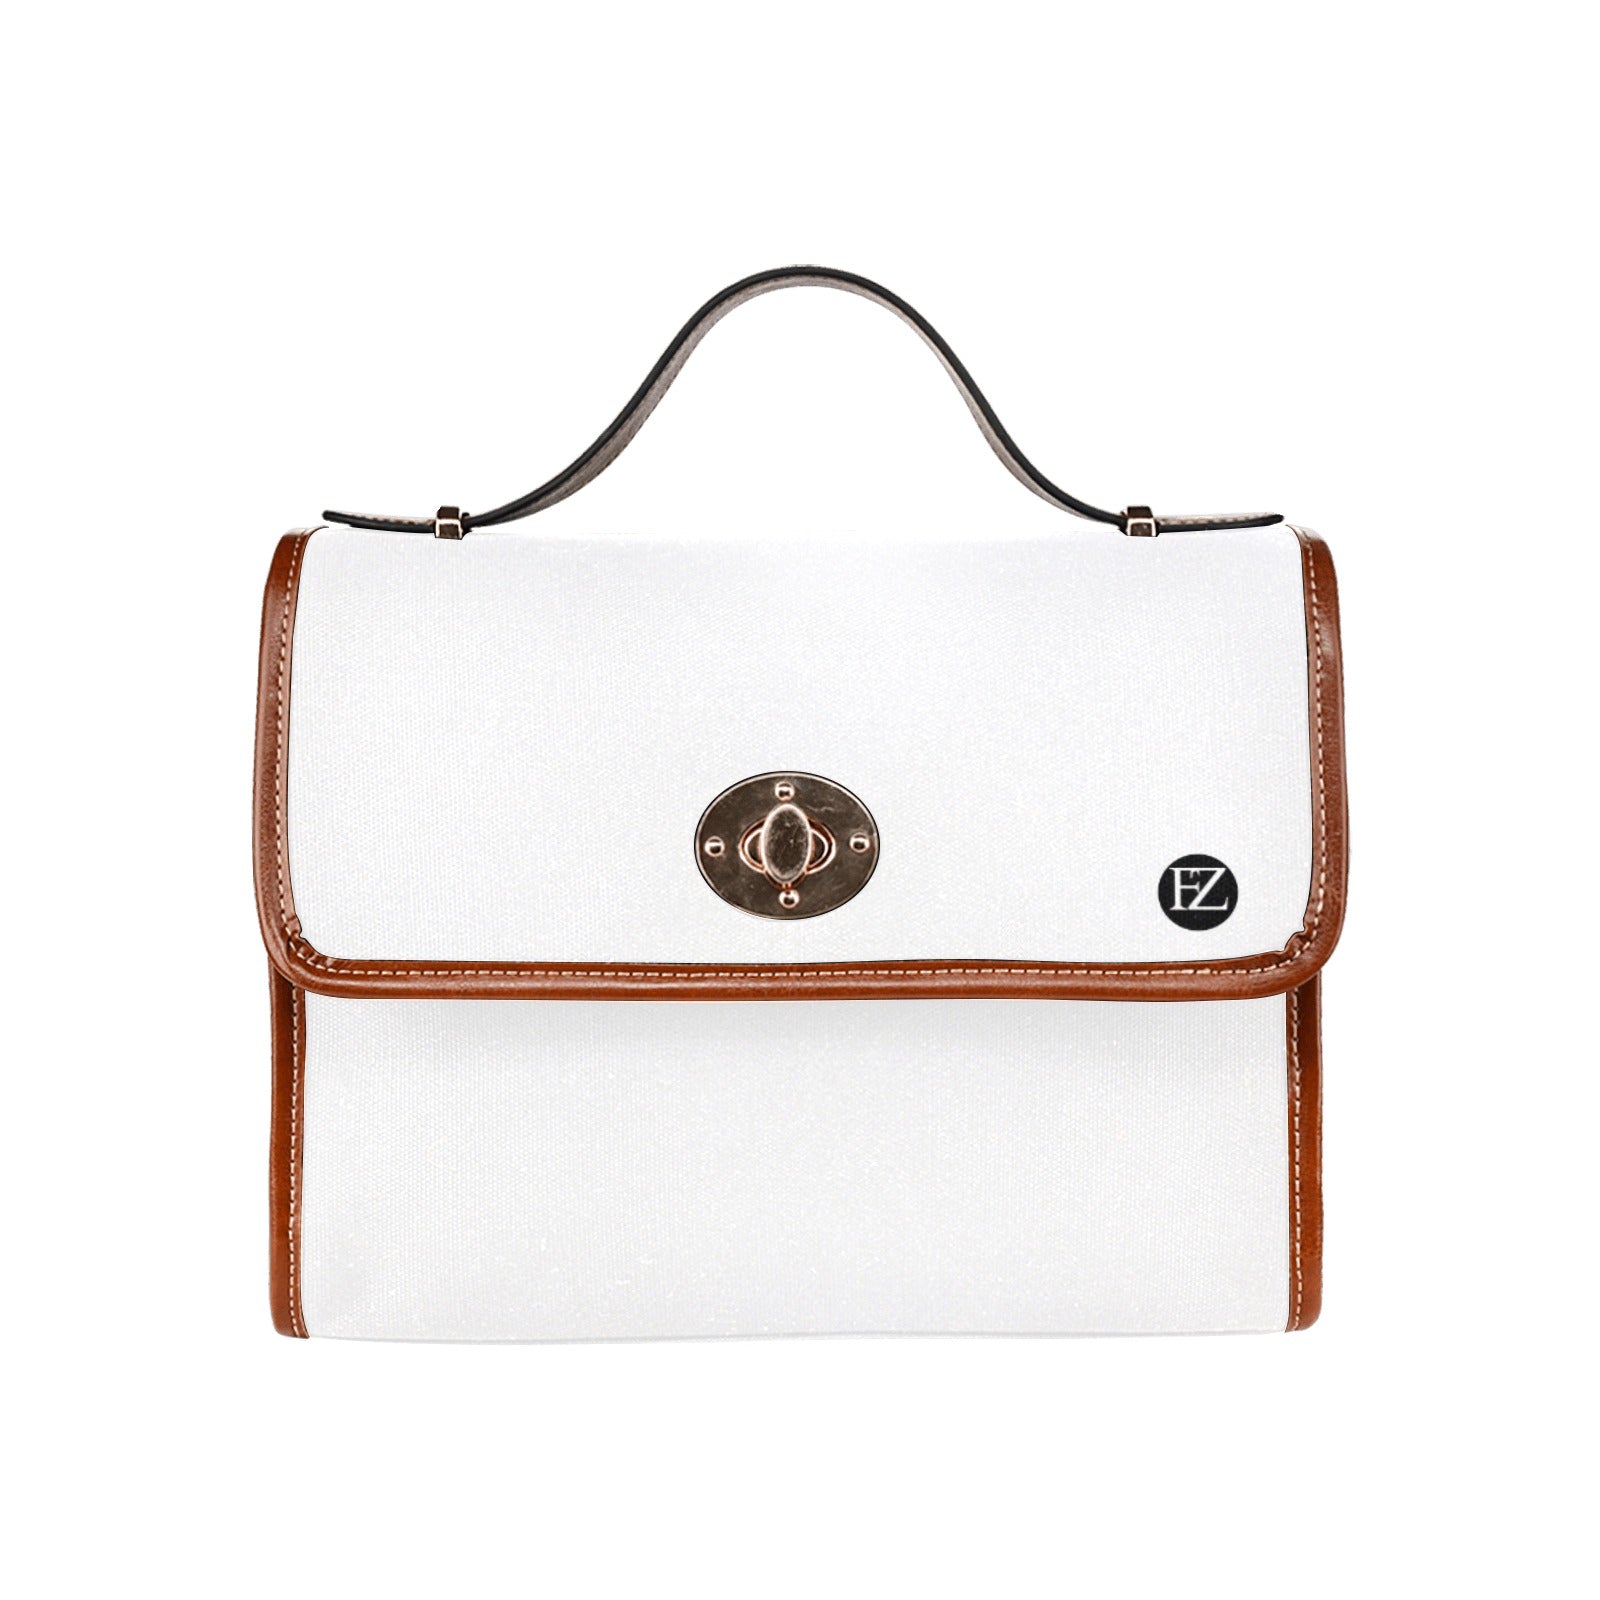 fz original handbag one size / fz original handbag all over print waterproof canvas bag(model1641)(brown strap)